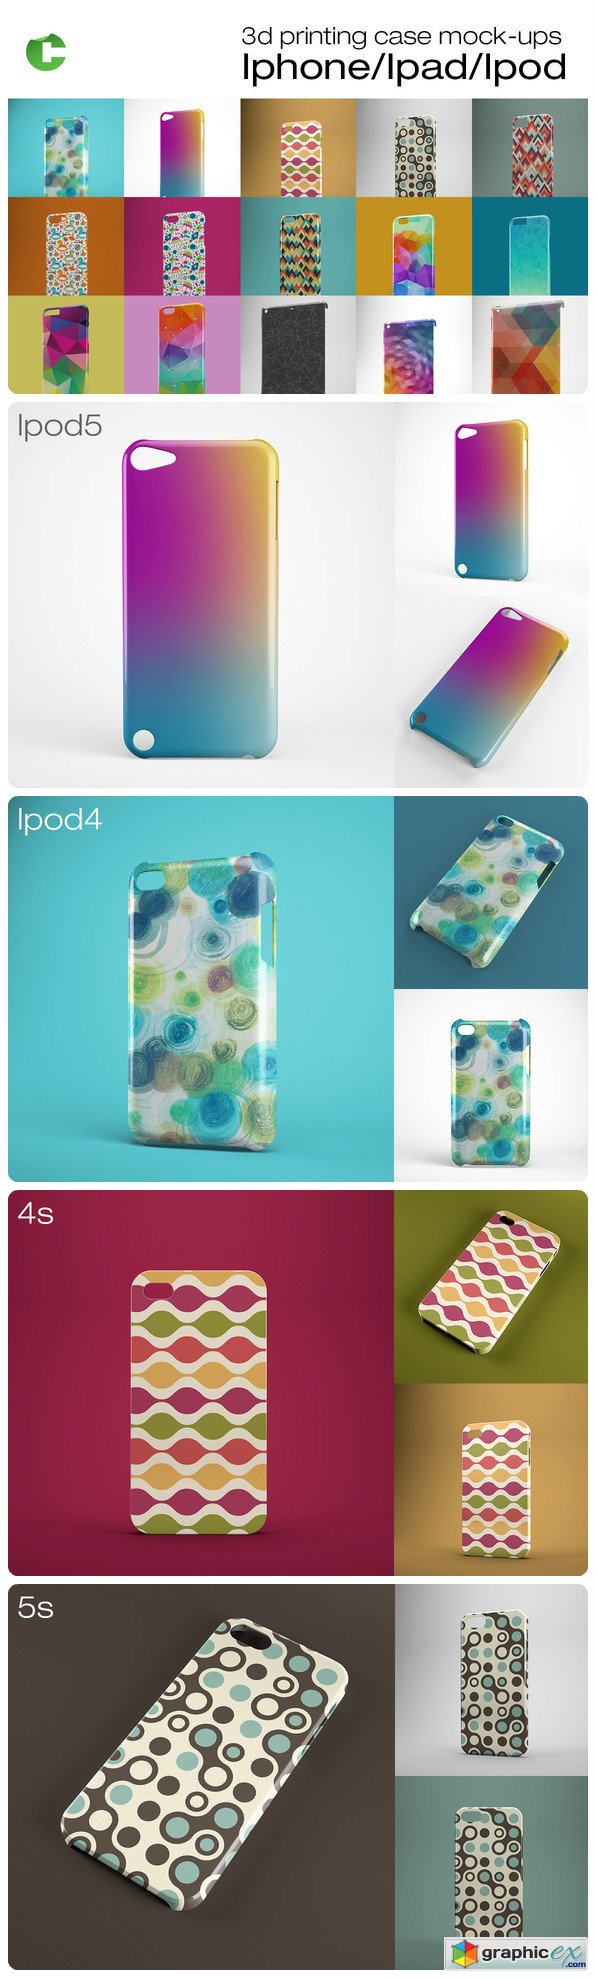 Iphone Ipad Ipod Cases Mock-up